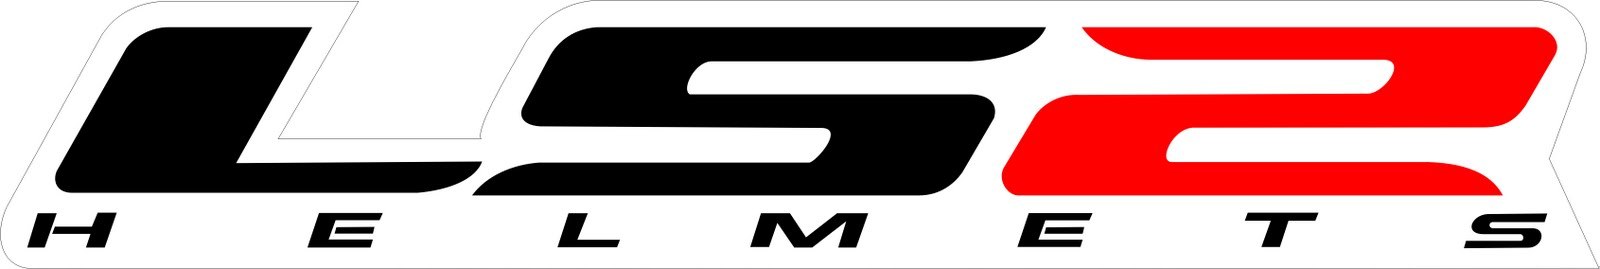 LS2_logo